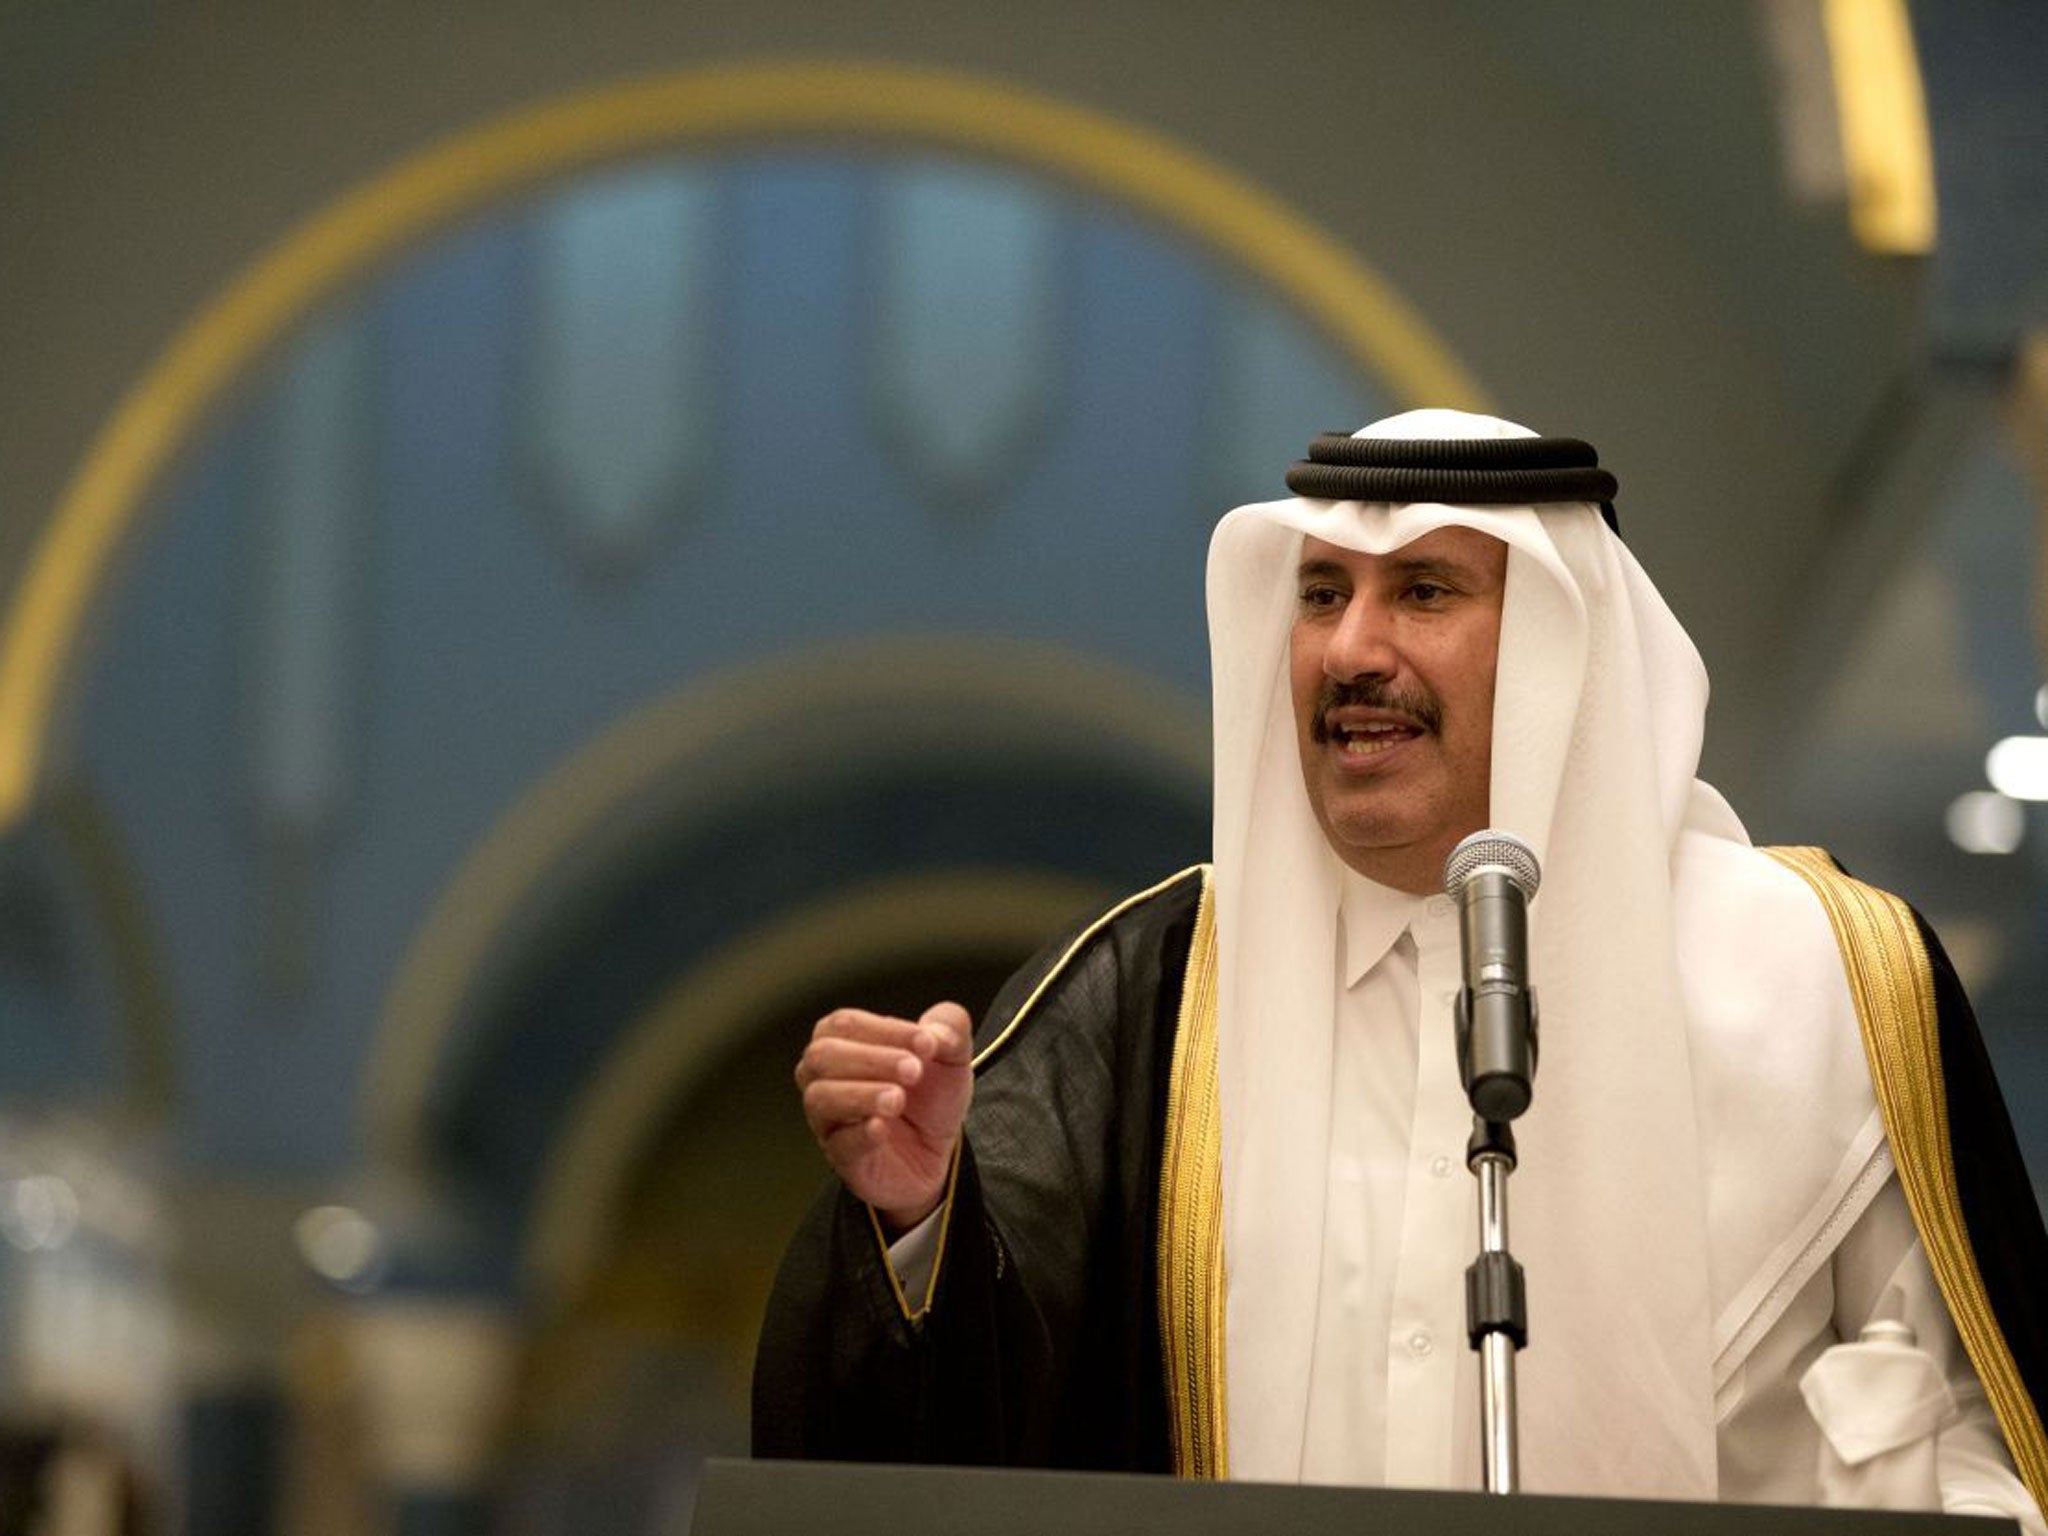 The statesman sheik: Hamad bin Jassim bin Jaber al-Thani